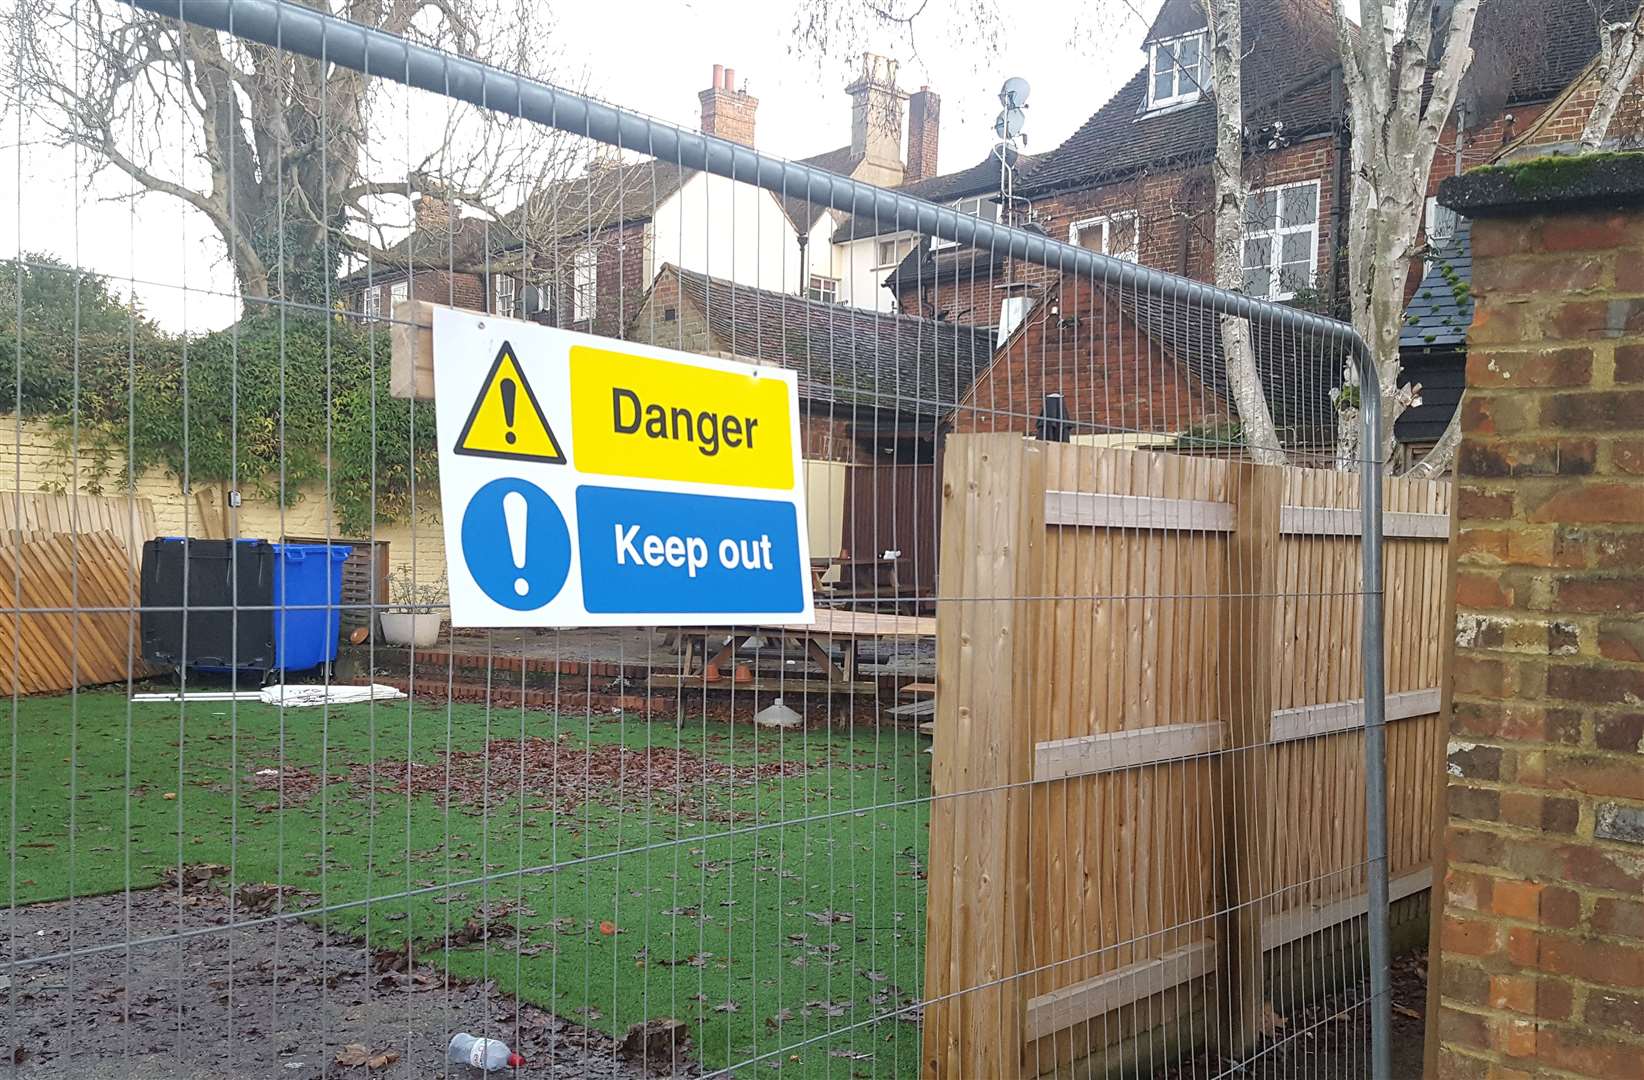 The pub garden has been fenced off